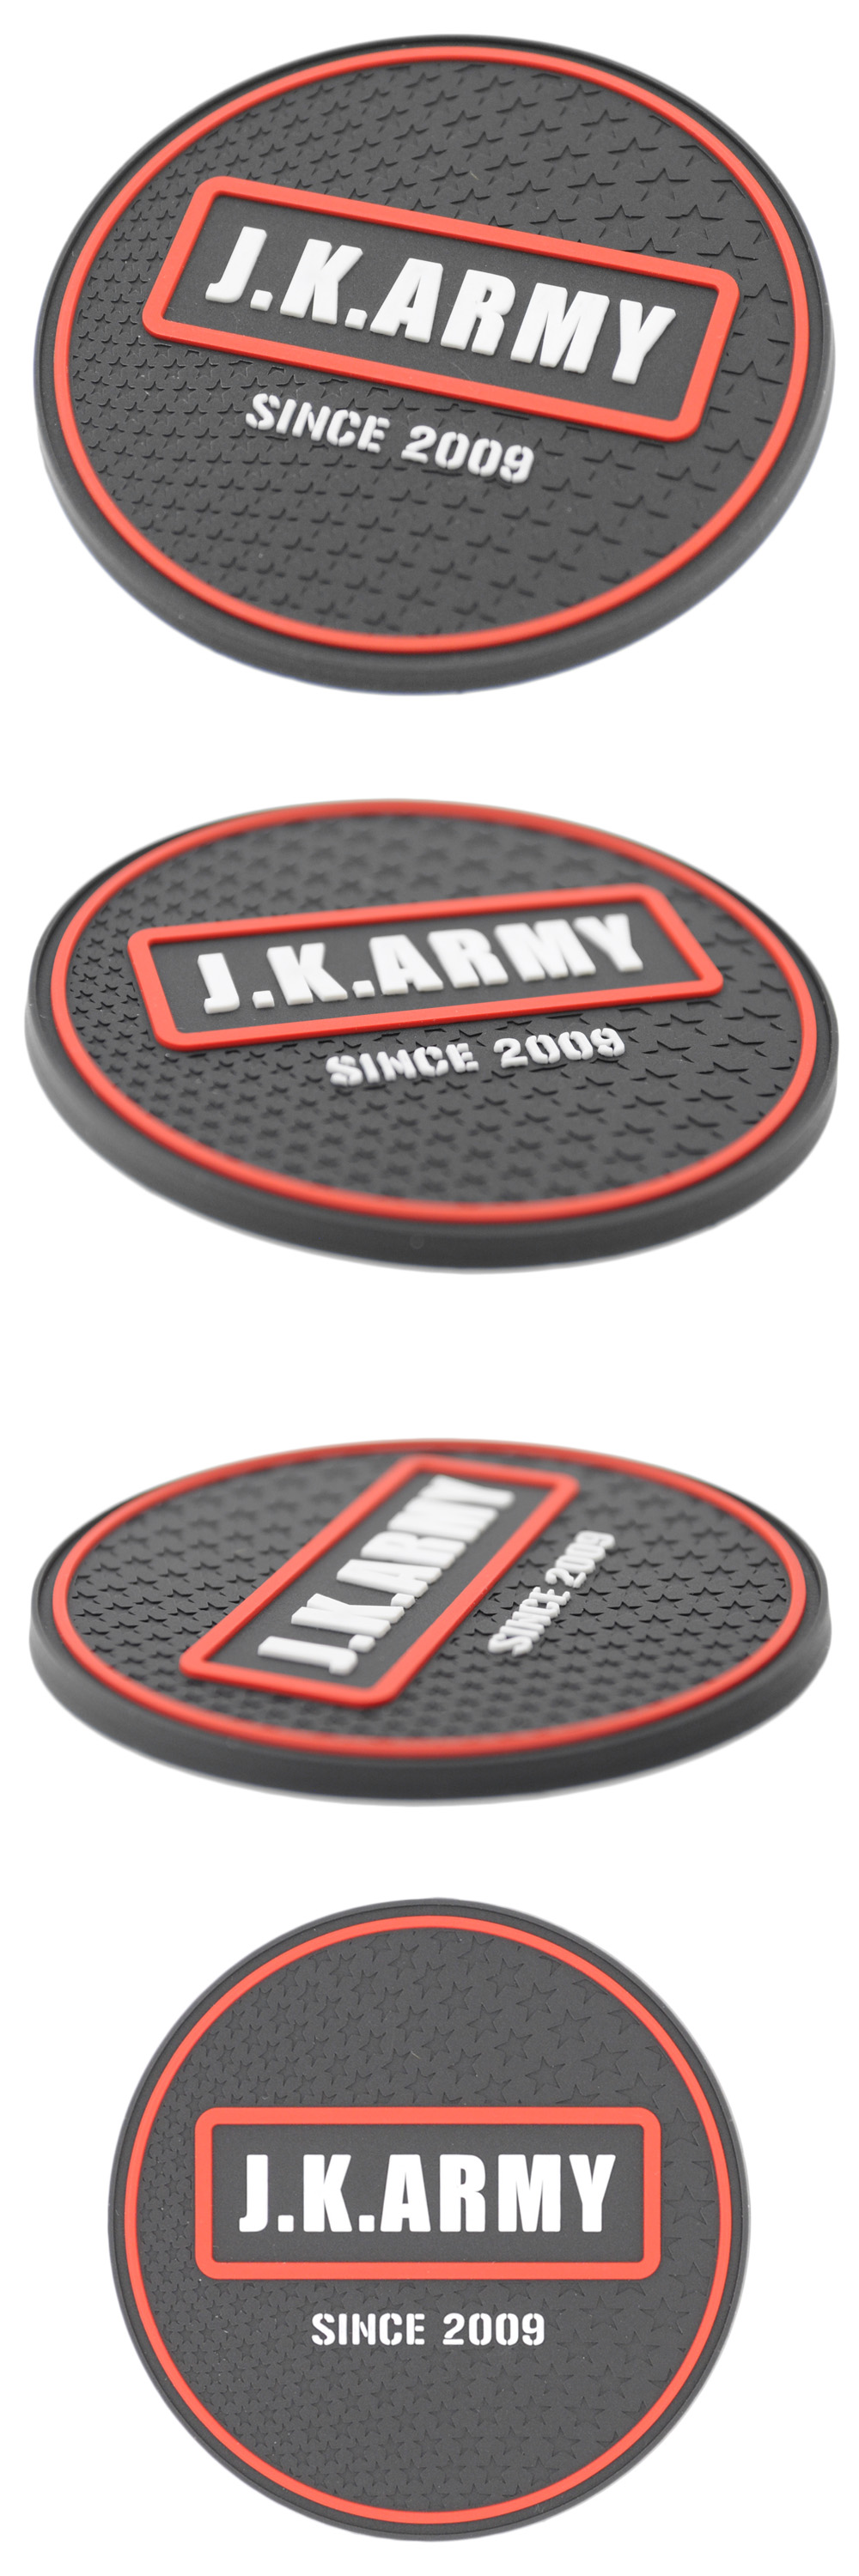 jkarmy logo since 2009